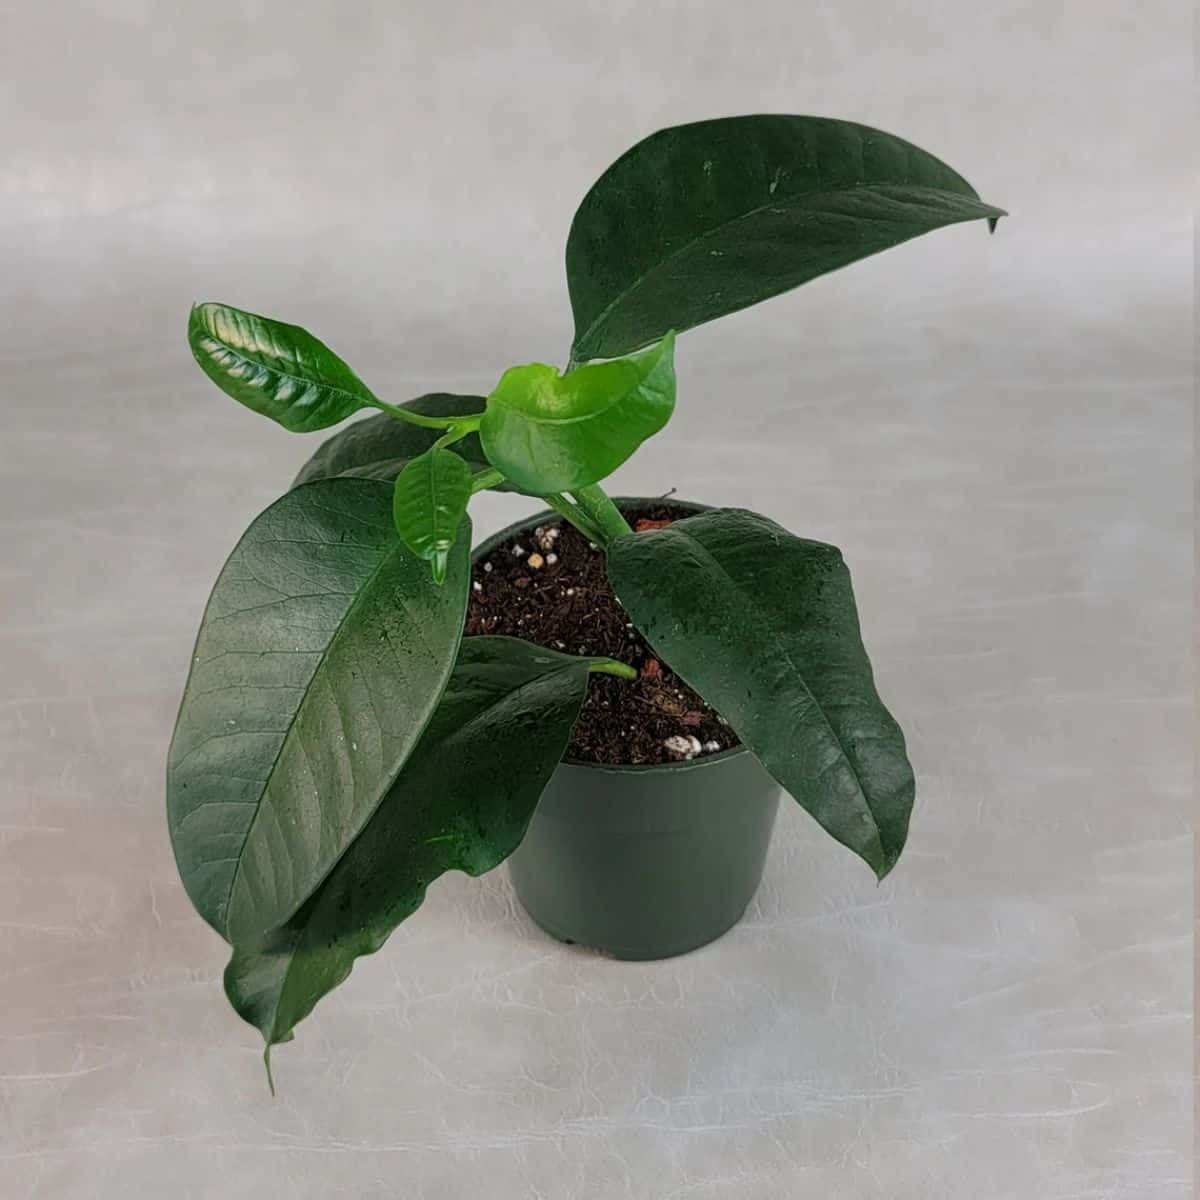 Hoya Multiflora grows in a green plastic pot.